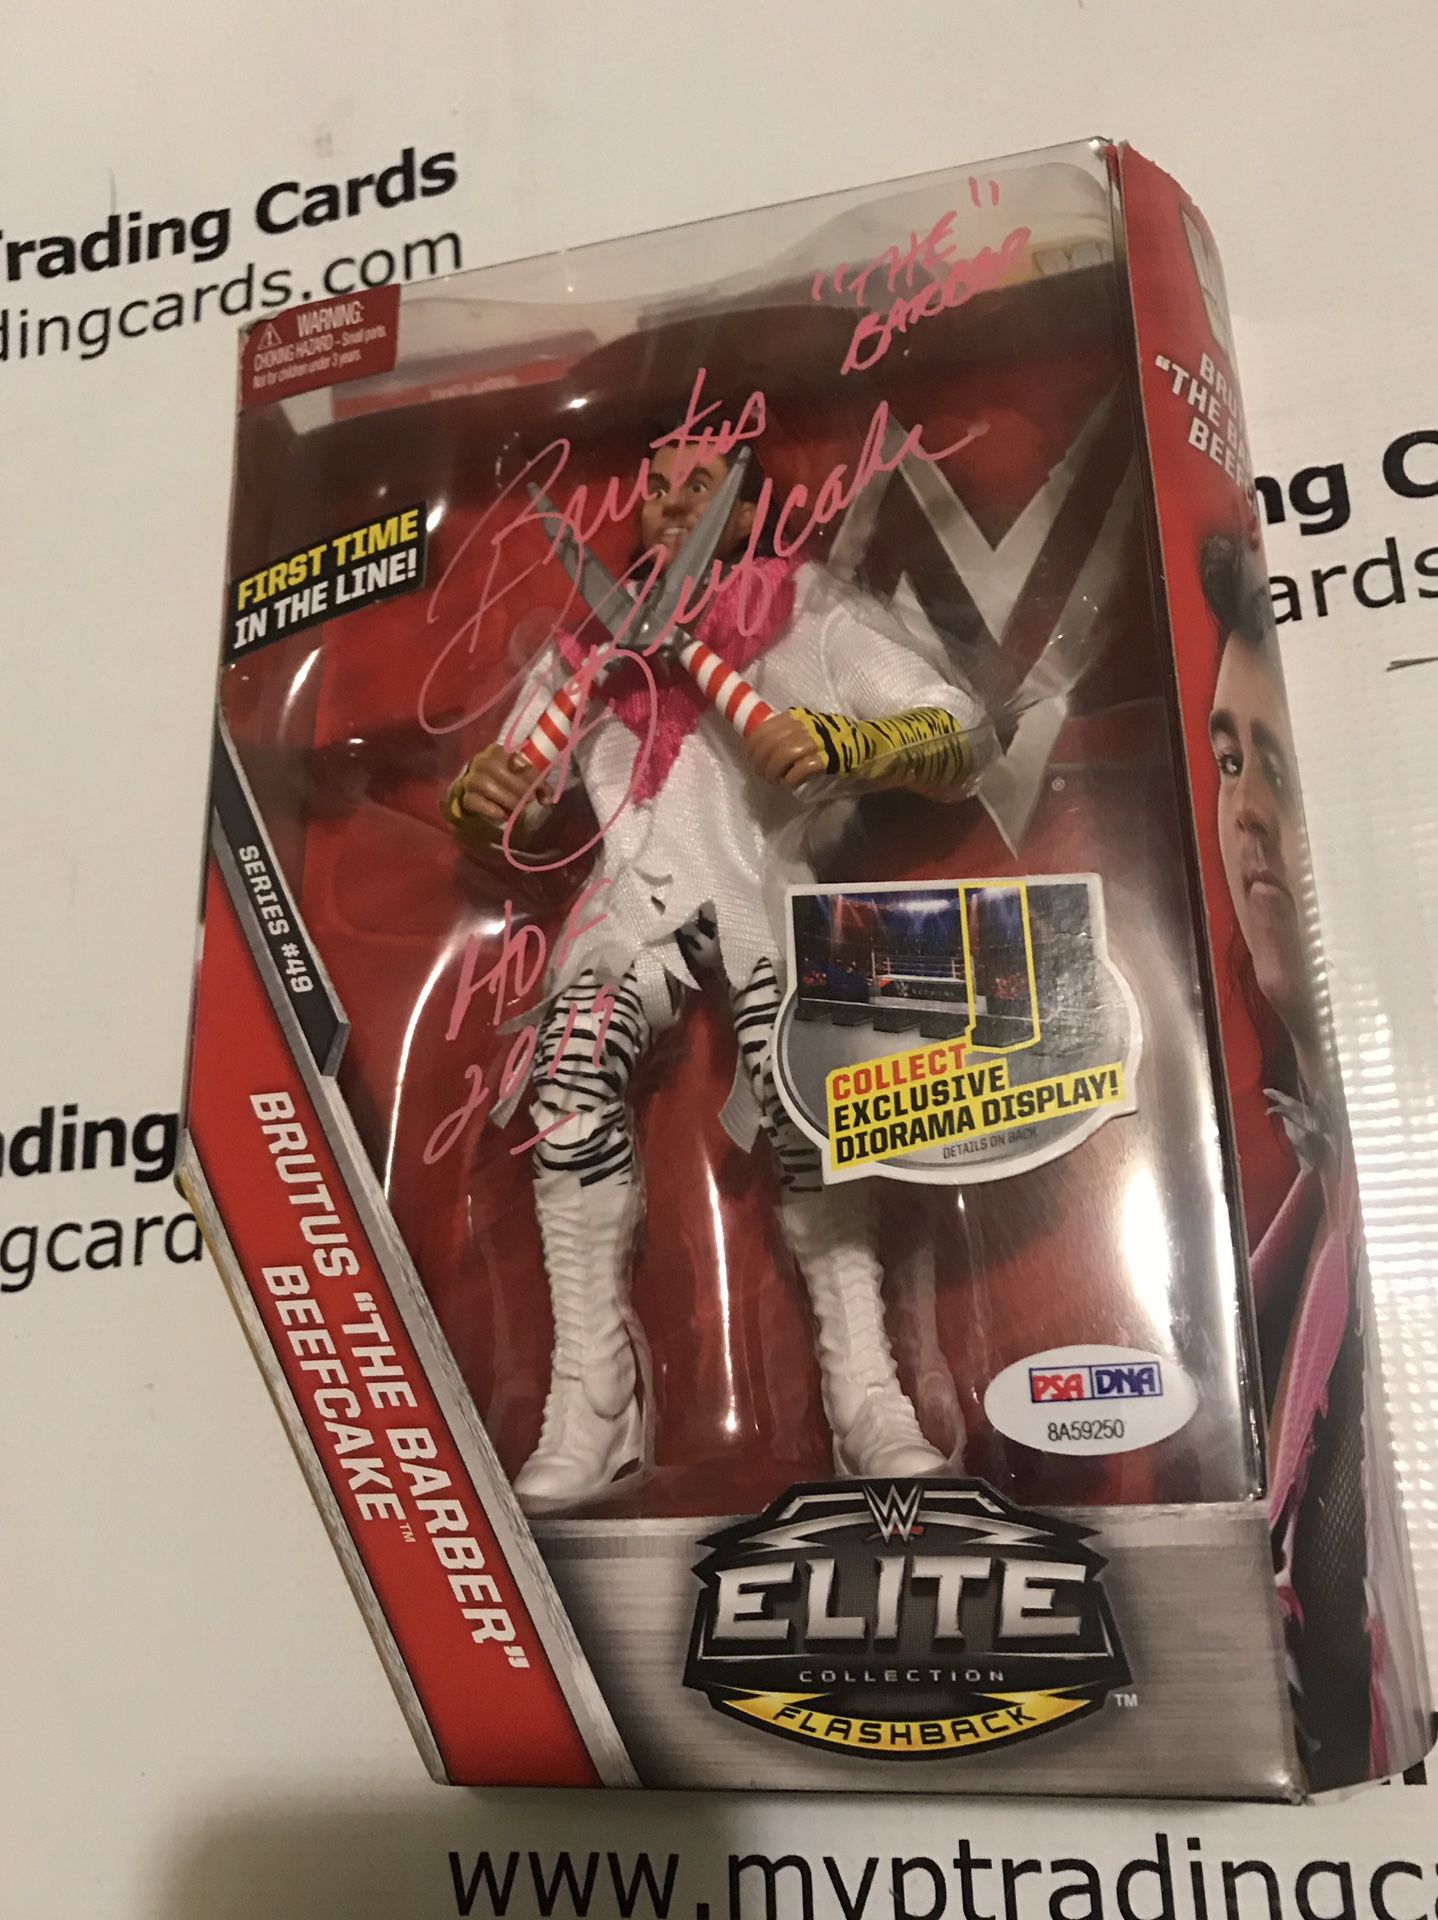 PSA/DNA Authentic Brutus Beefcake Signed Elite Flashback Action Figure w/ HOF Inscription